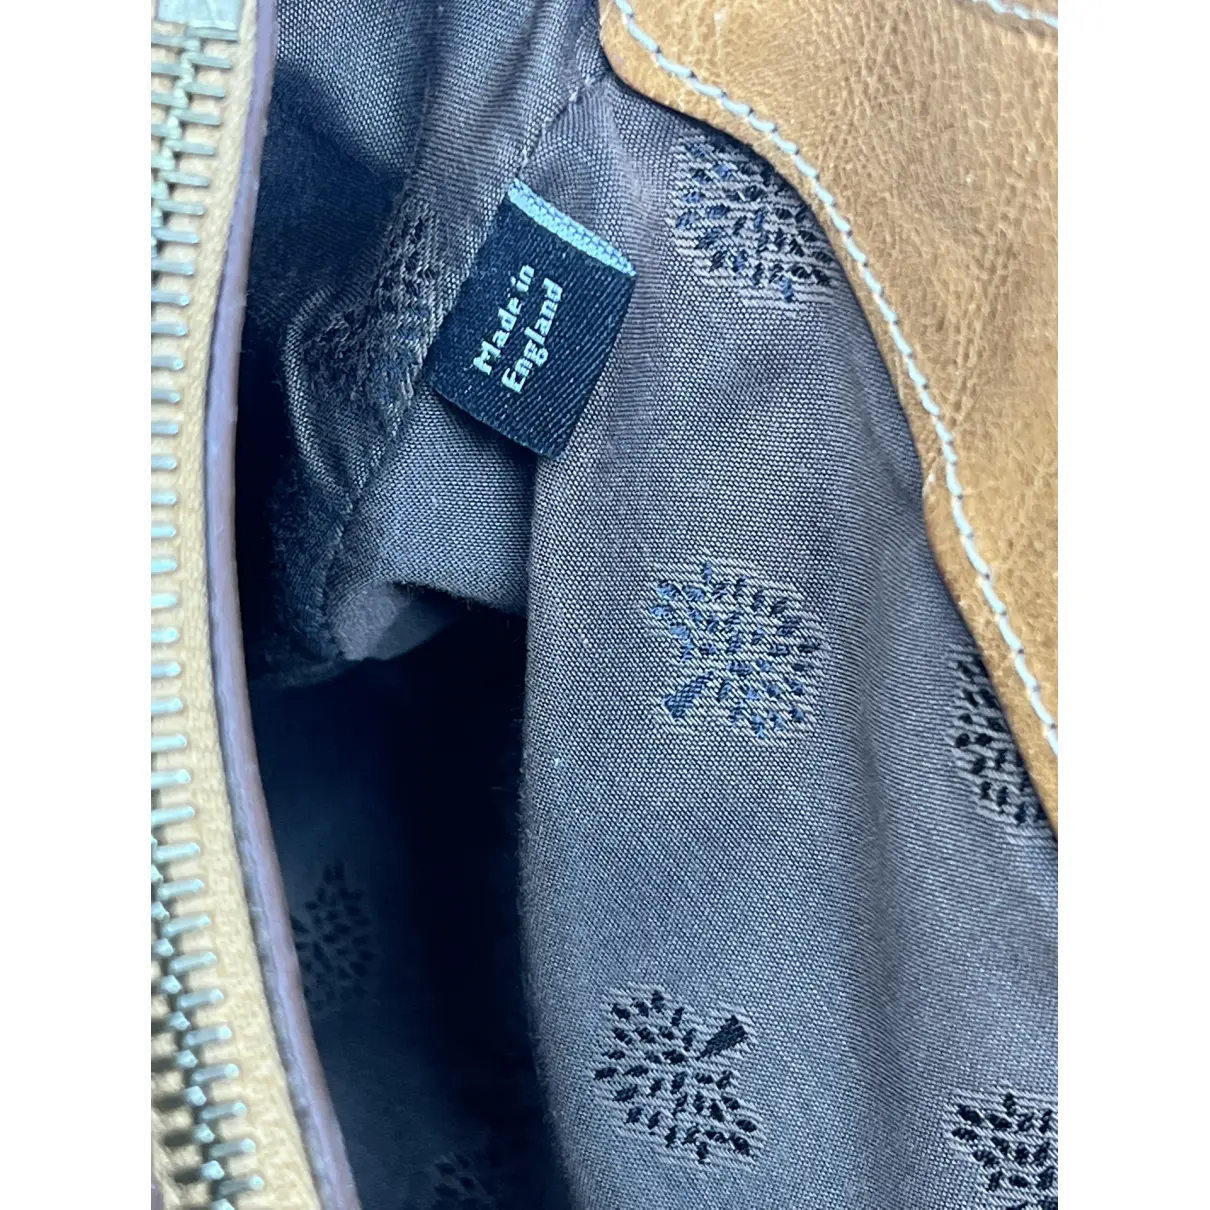 Buy Mulberry Kensington leather handbag online